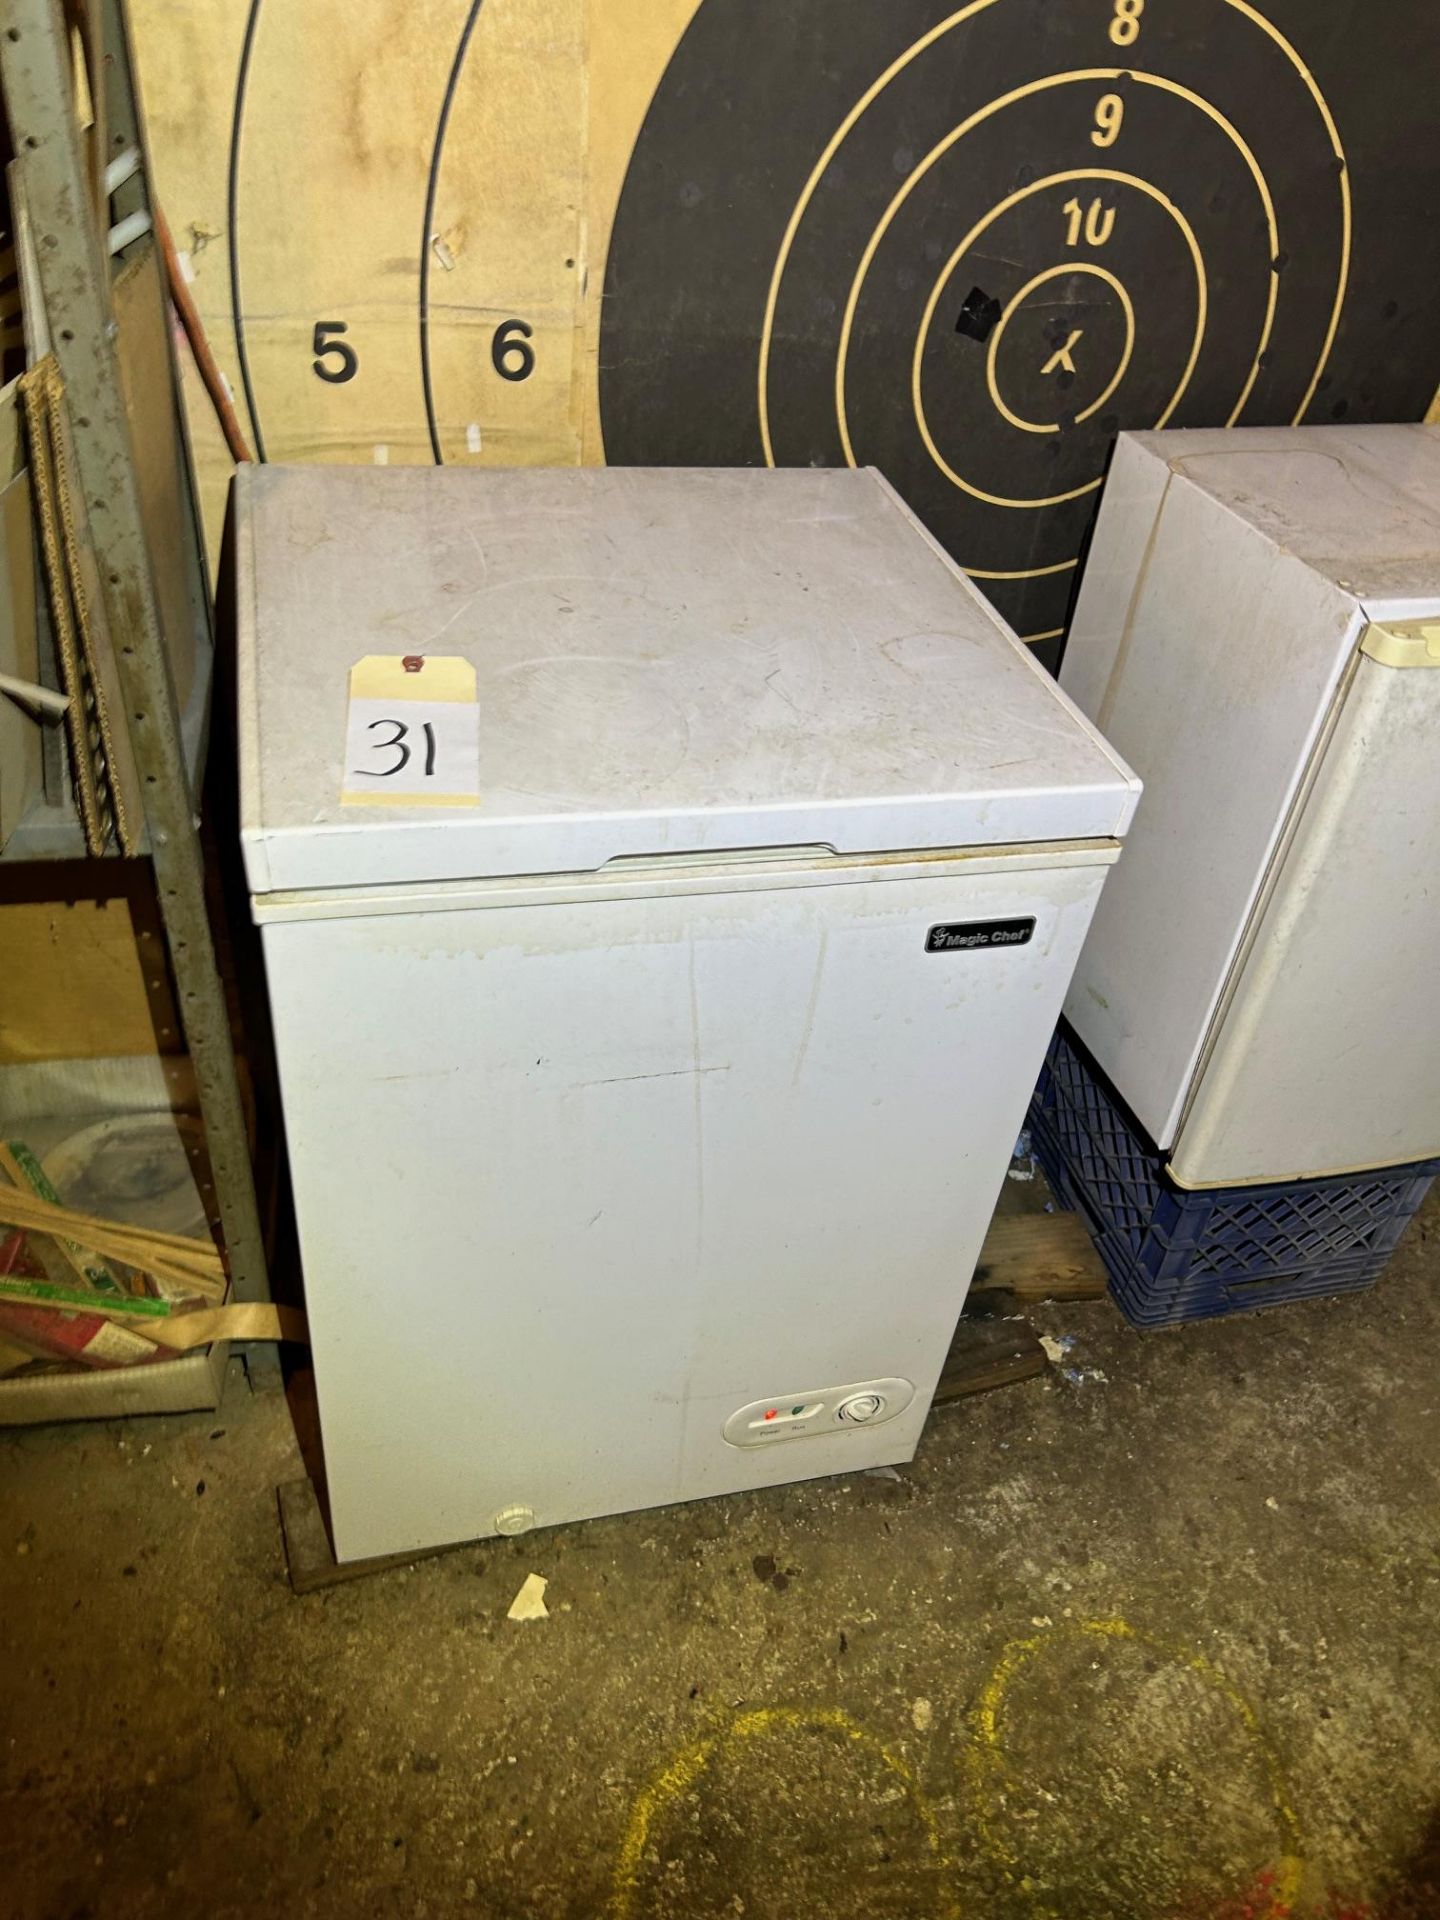 Lot of (2) Mini-Refrigerators - Image 2 of 3